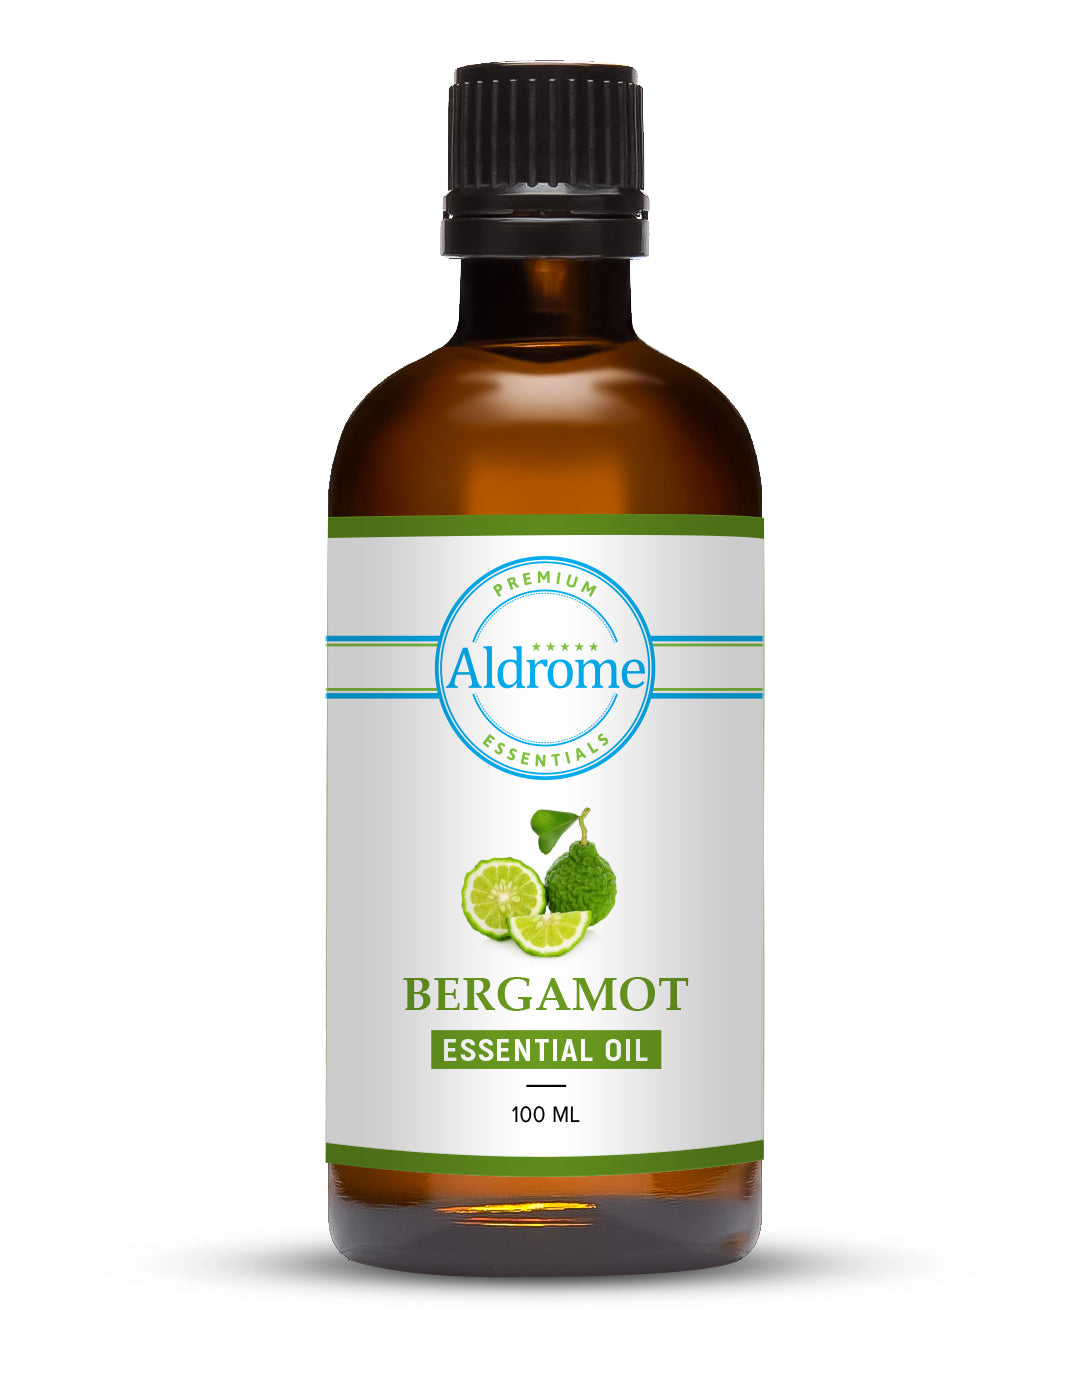  Buy Bergamot Essential Oil 100ml at Best price | Aldrome Premium Fragrance Oil